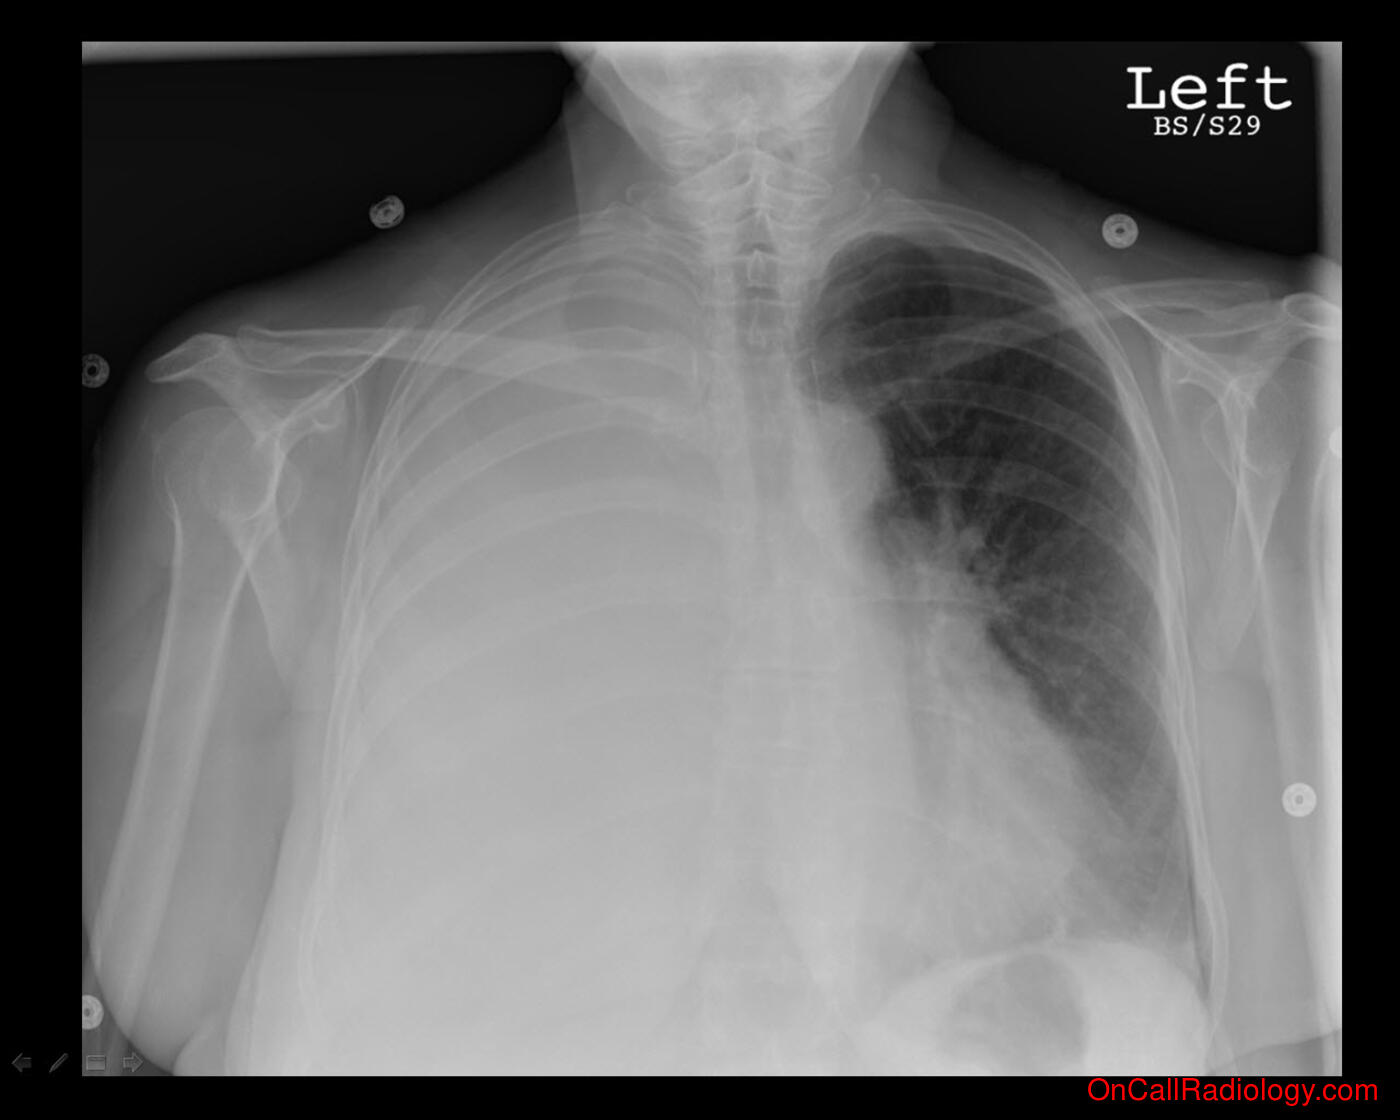 Fluid (Pleural effusion - Plain film, Radiograph, CT, Computed tomography)